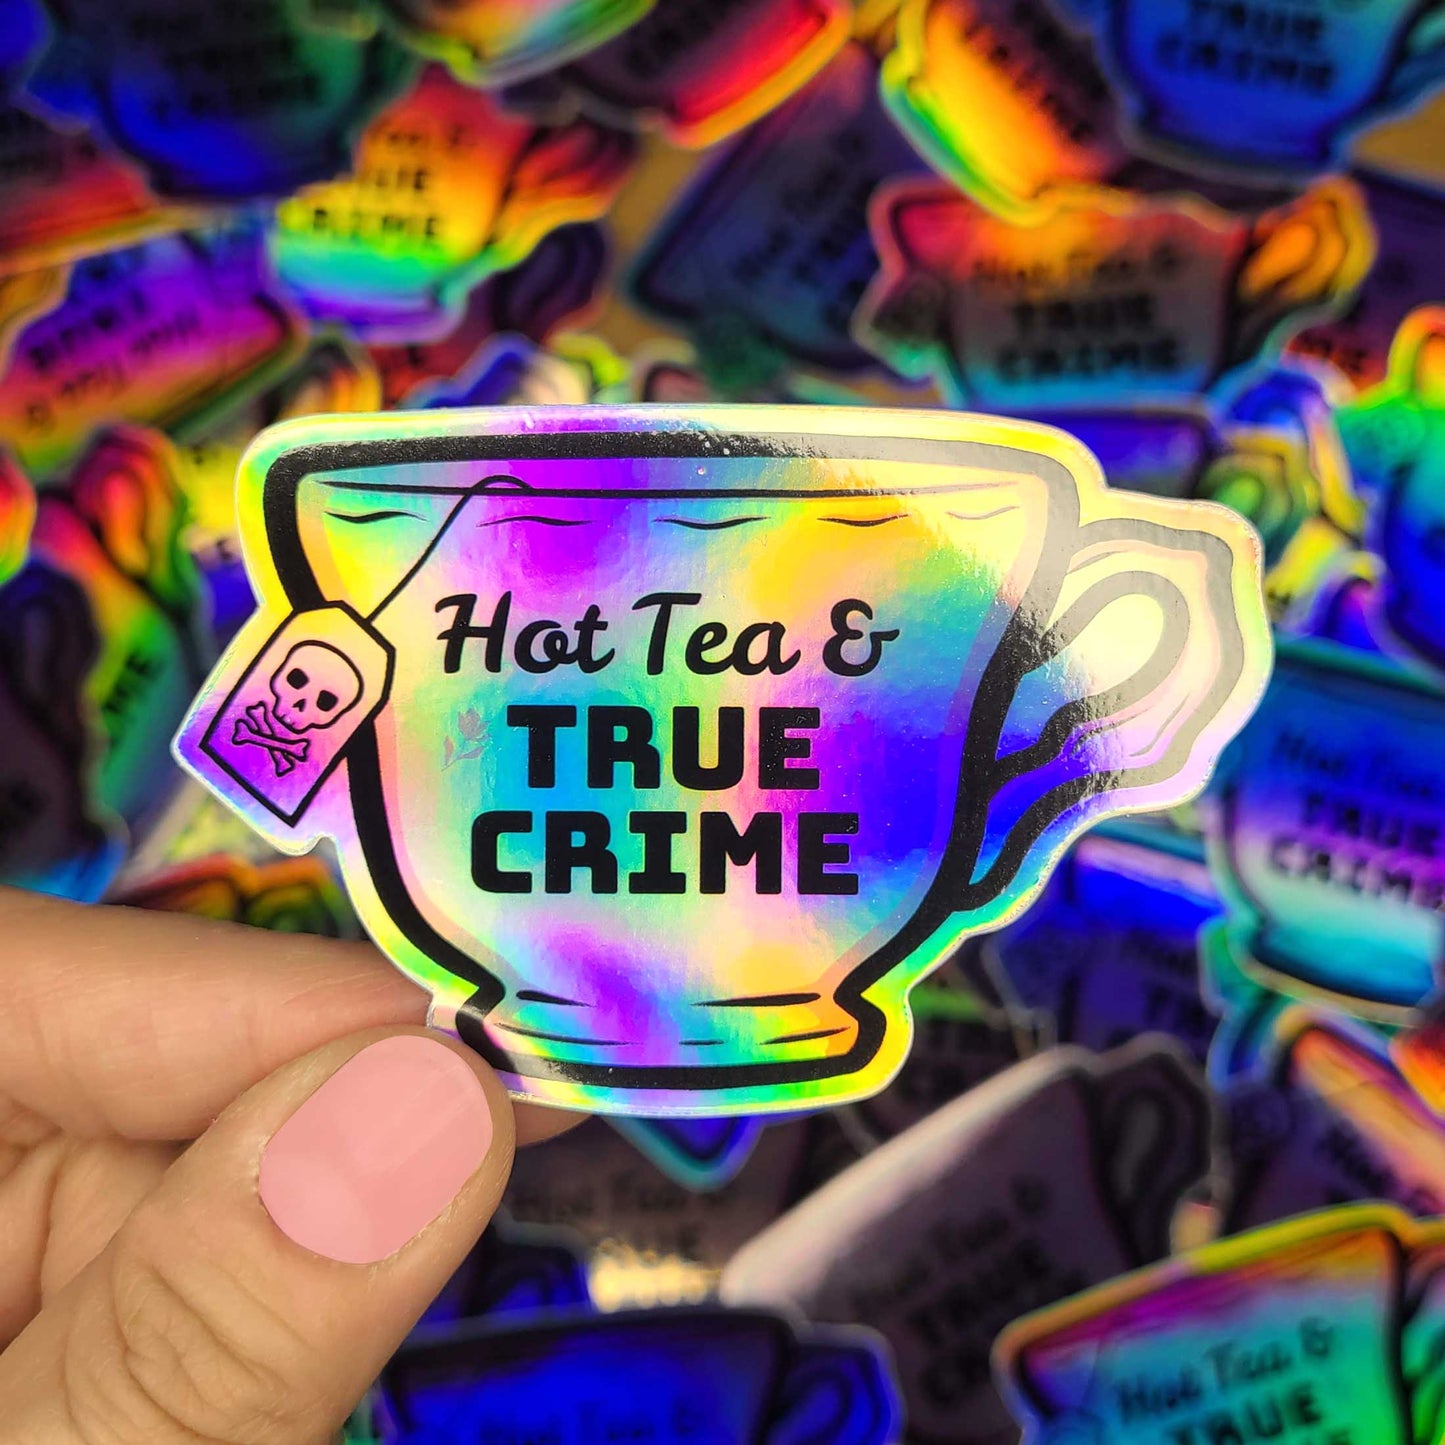 Hot Tea and True Crime Holo Sticker